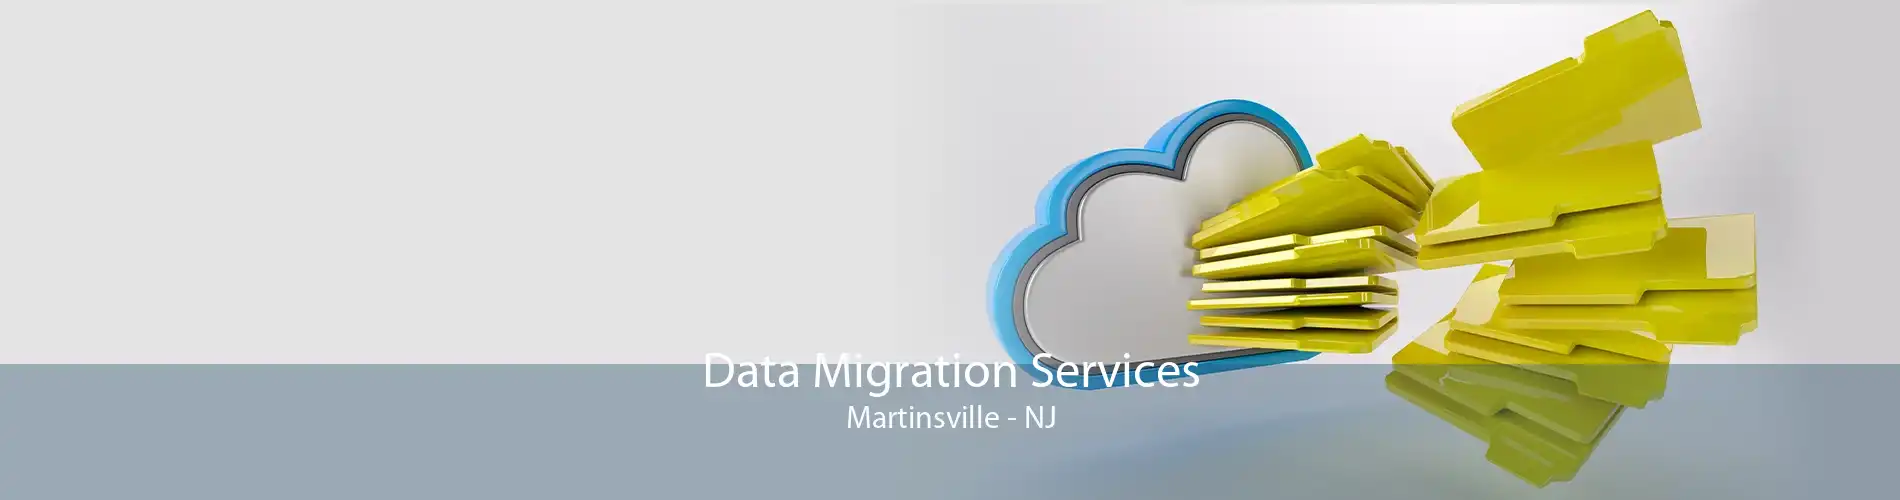 Data Migration Services Martinsville - NJ